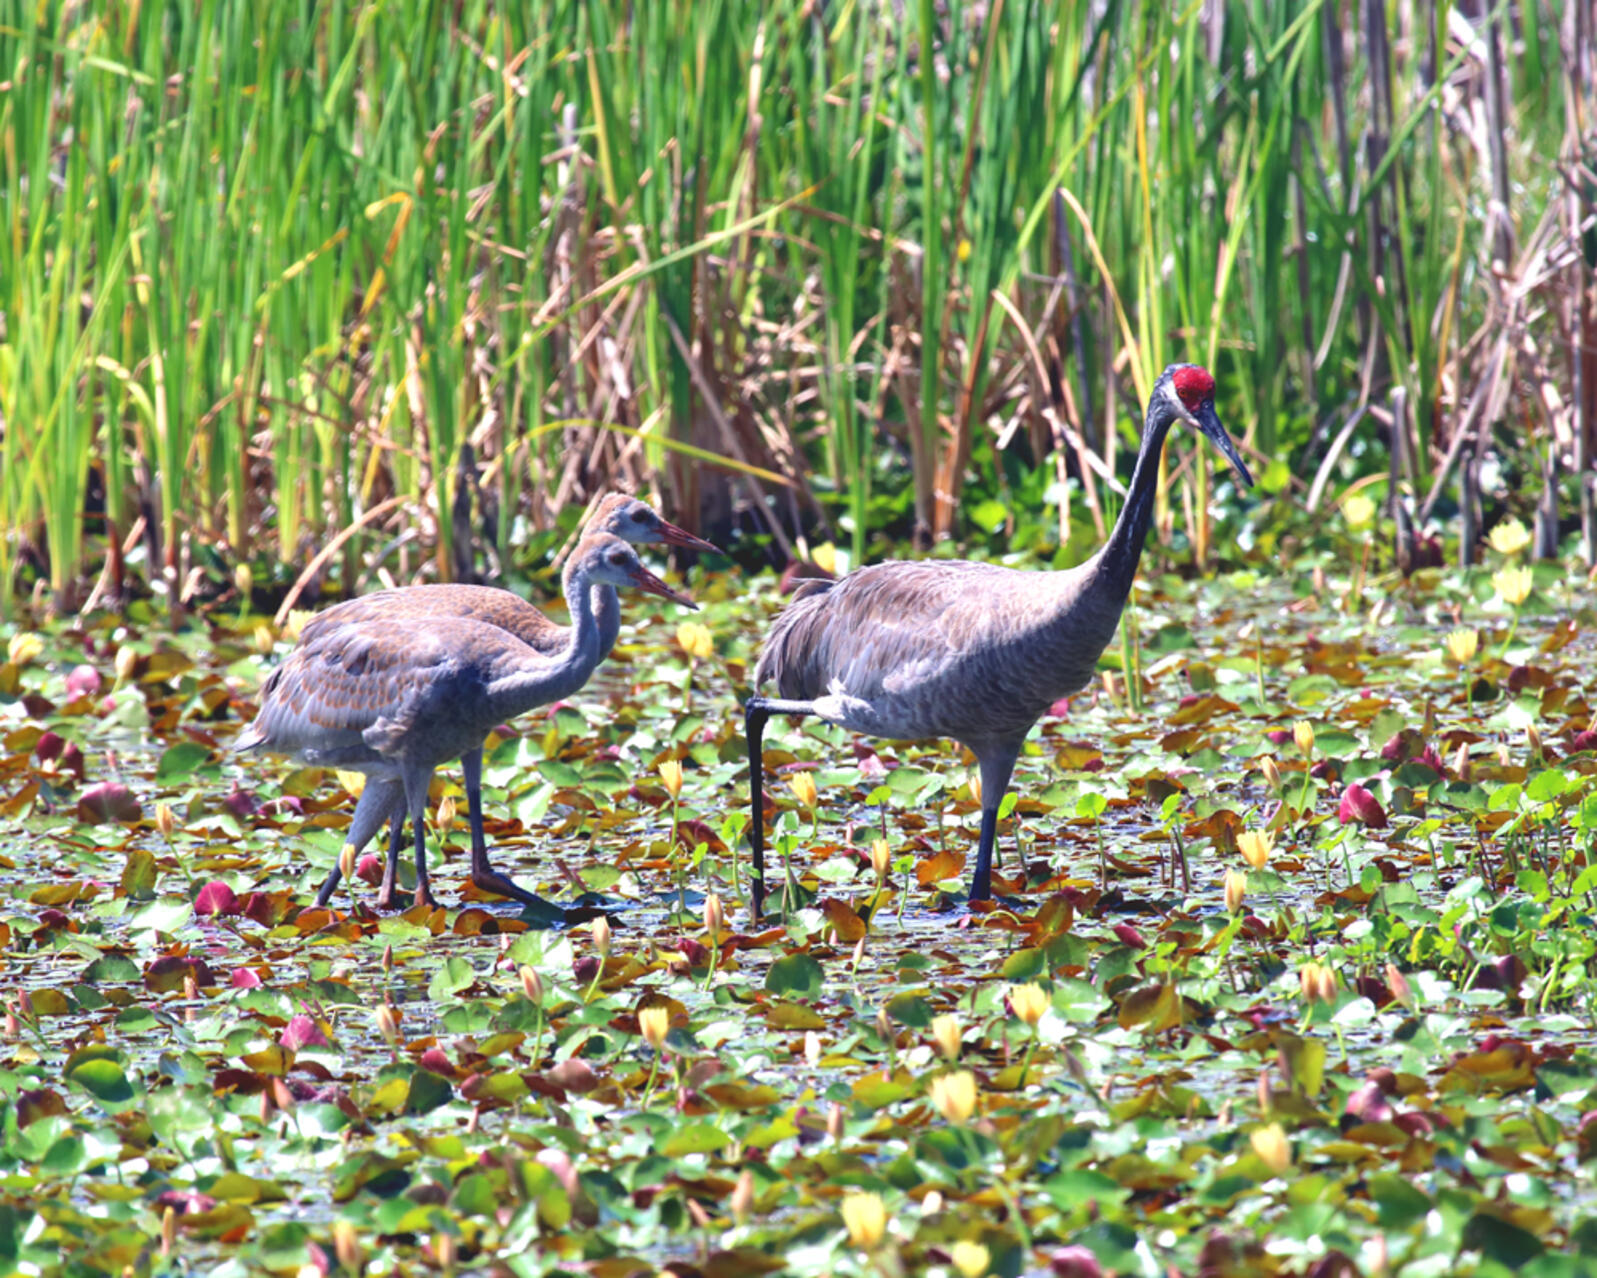 Three sandhill cranes wade in a shallow wetland